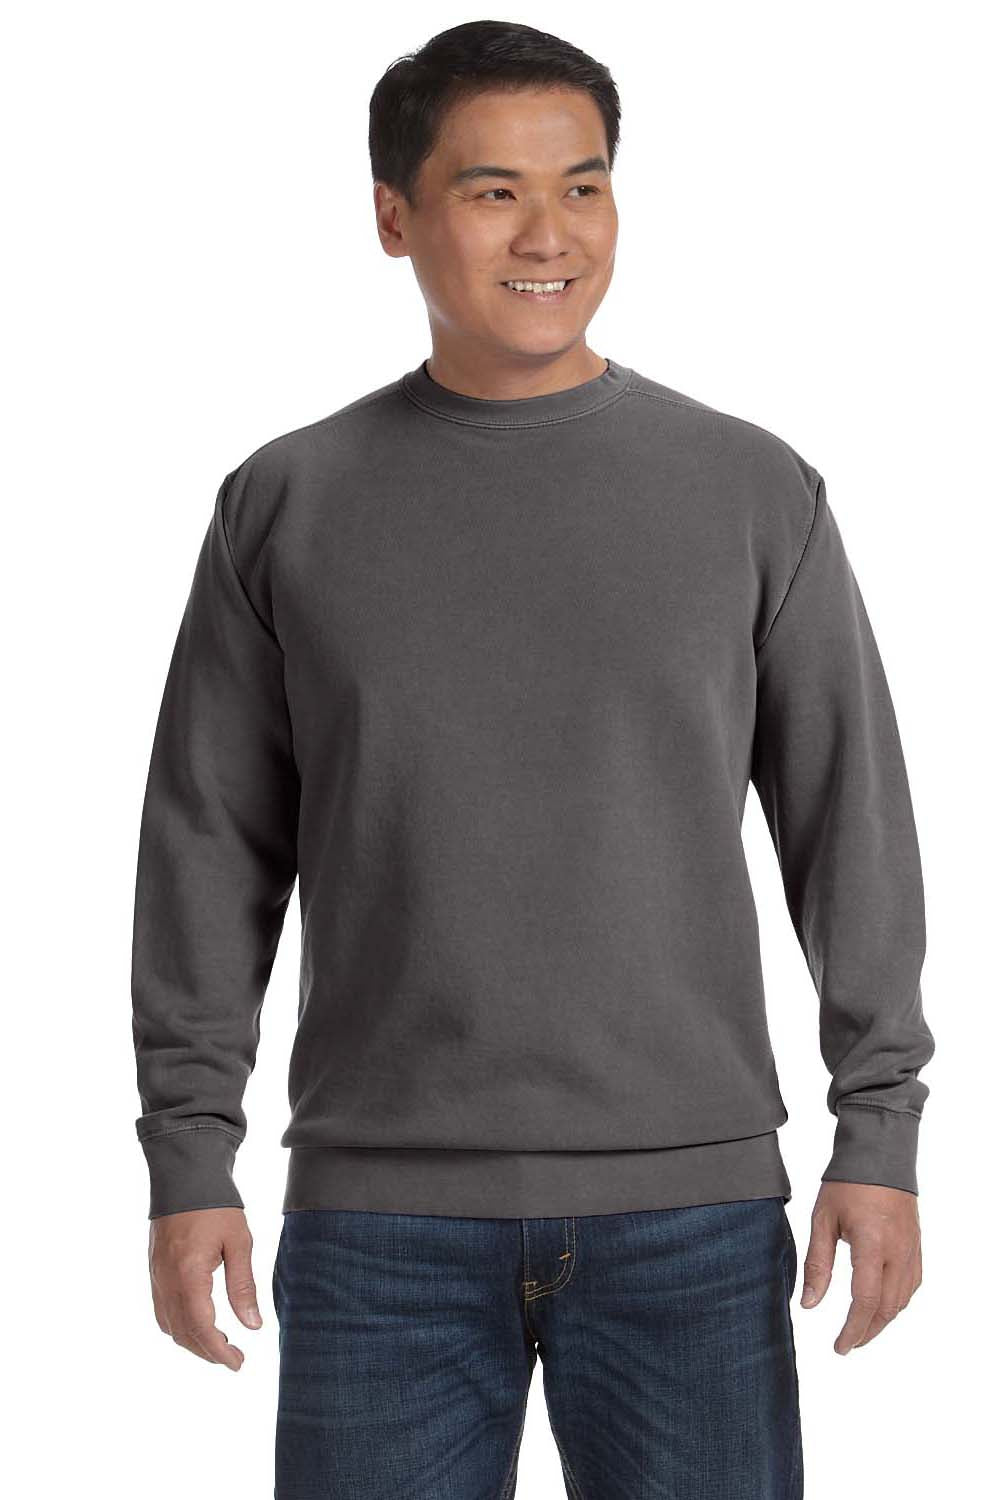 Comfort Colors 1566 Mens Crewneck Sweatshirt Pepper Grey Front